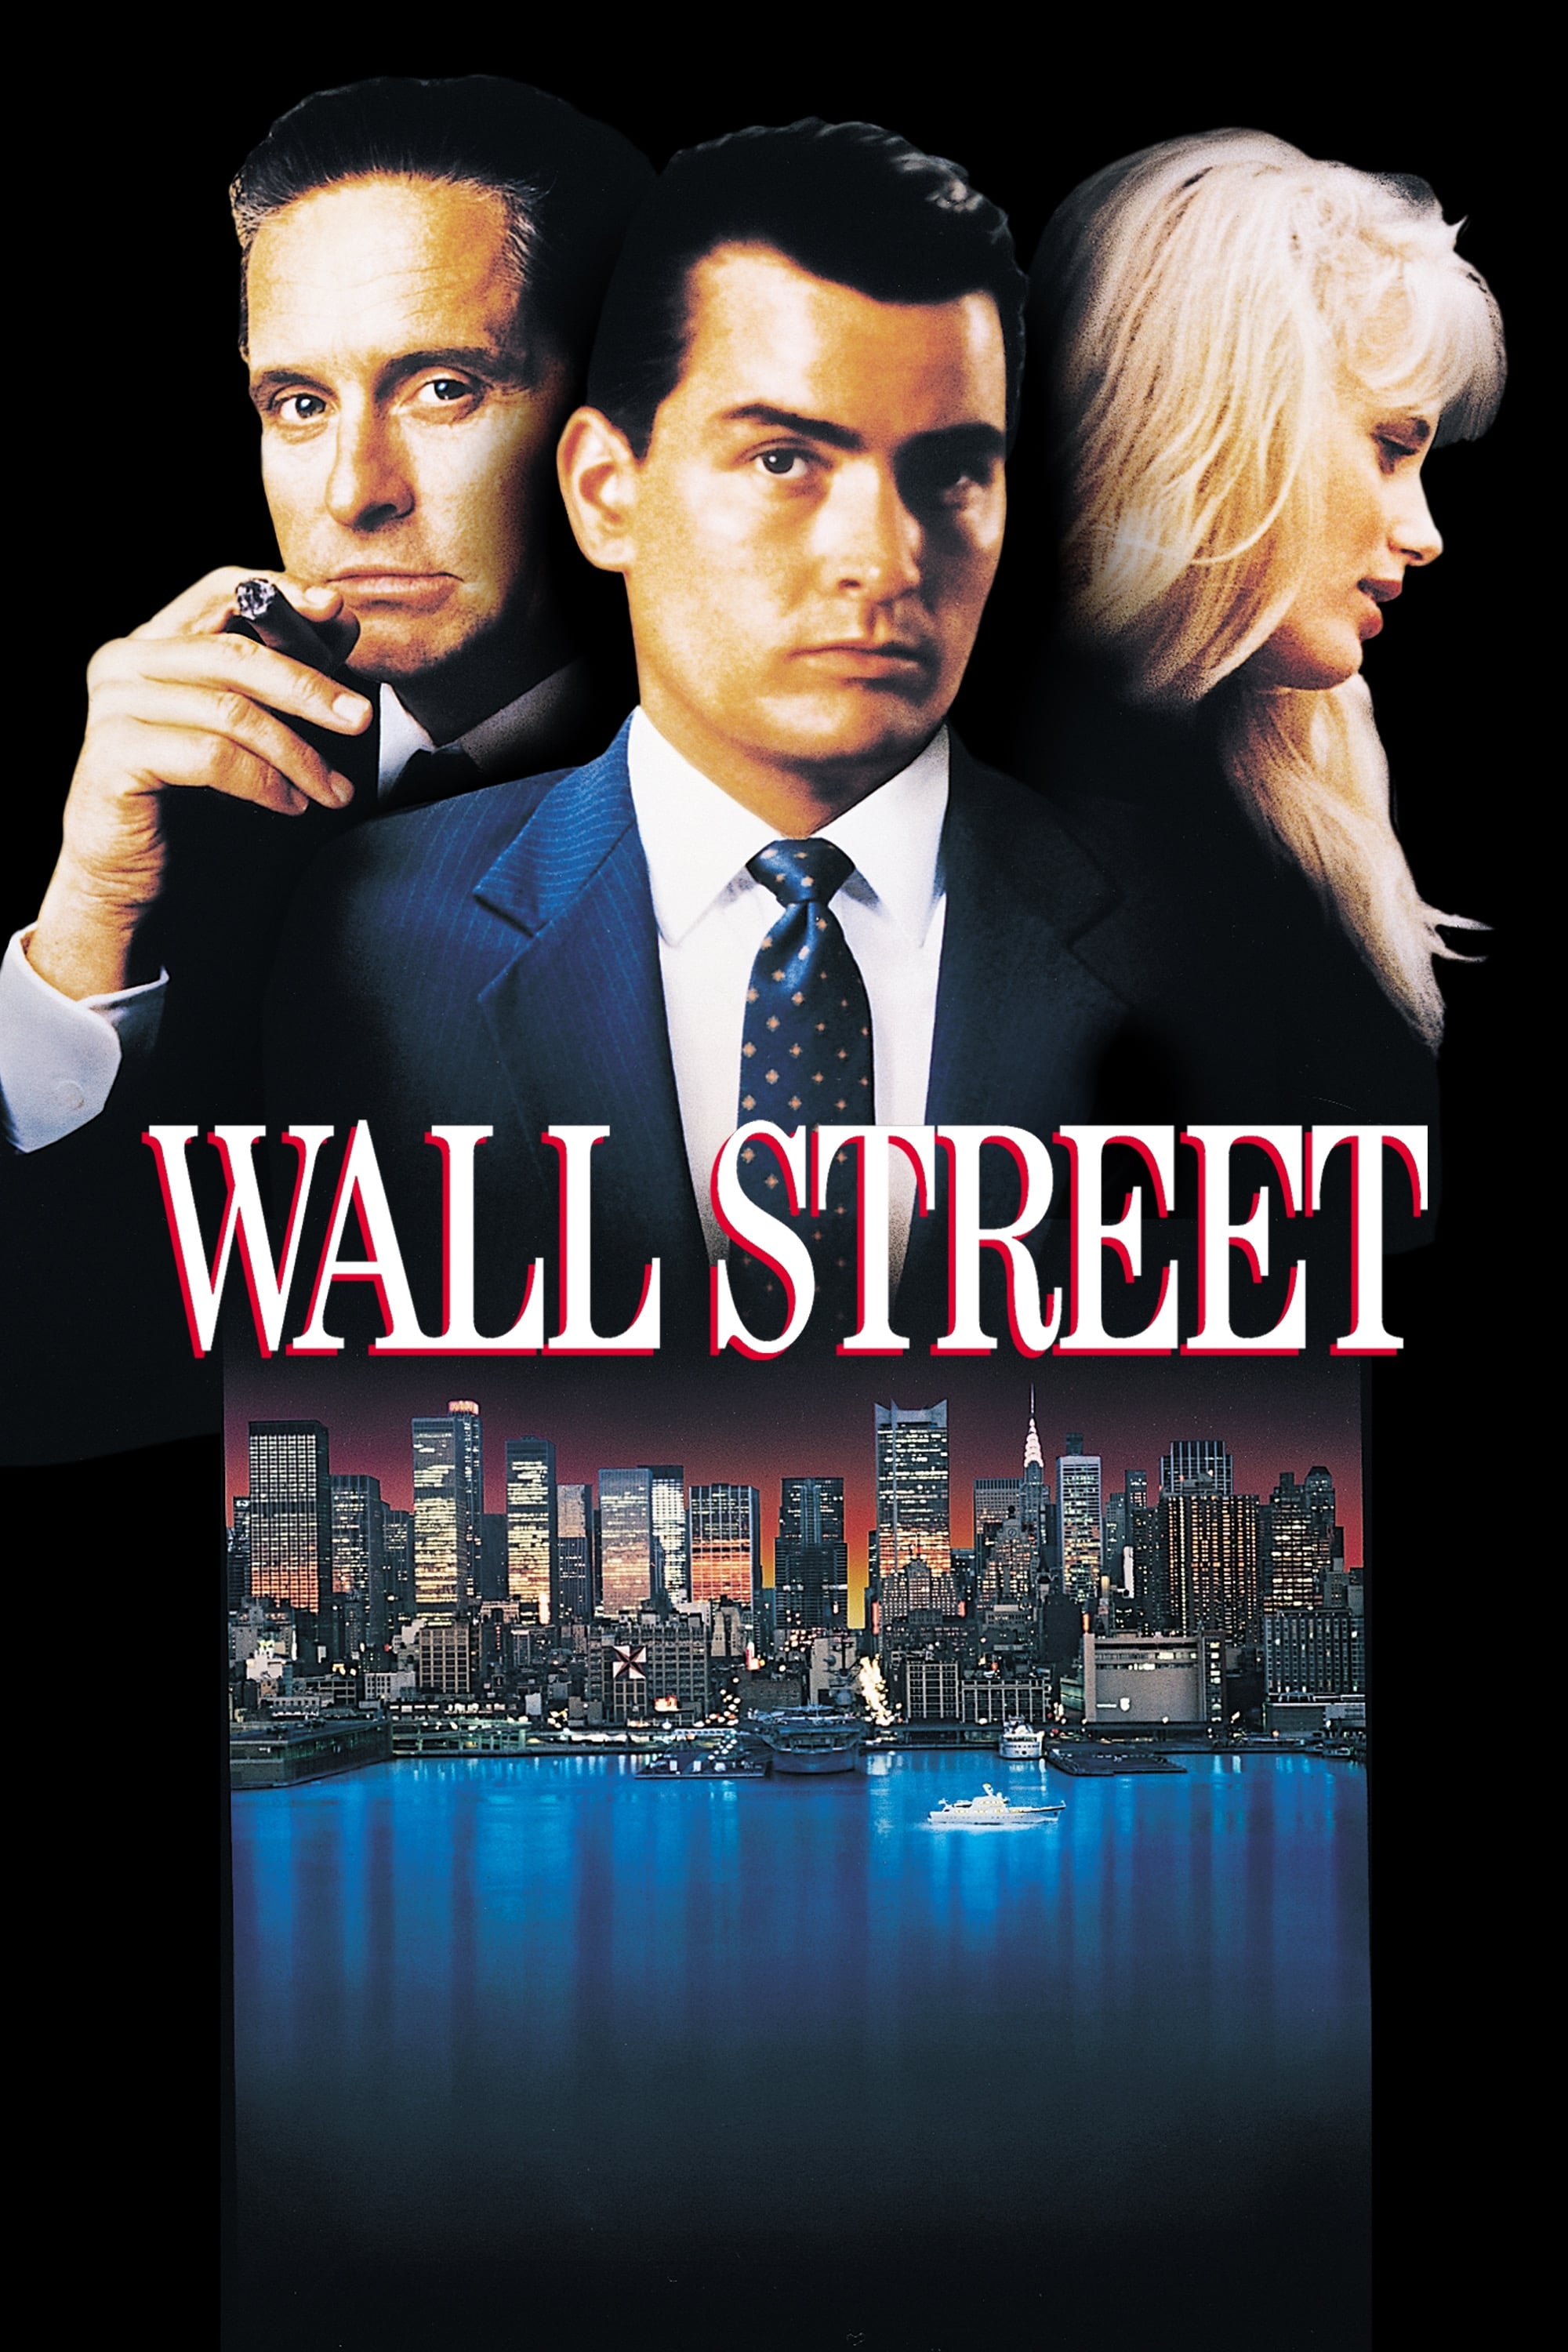 Banner Phim Phố Wall (Wall Street)